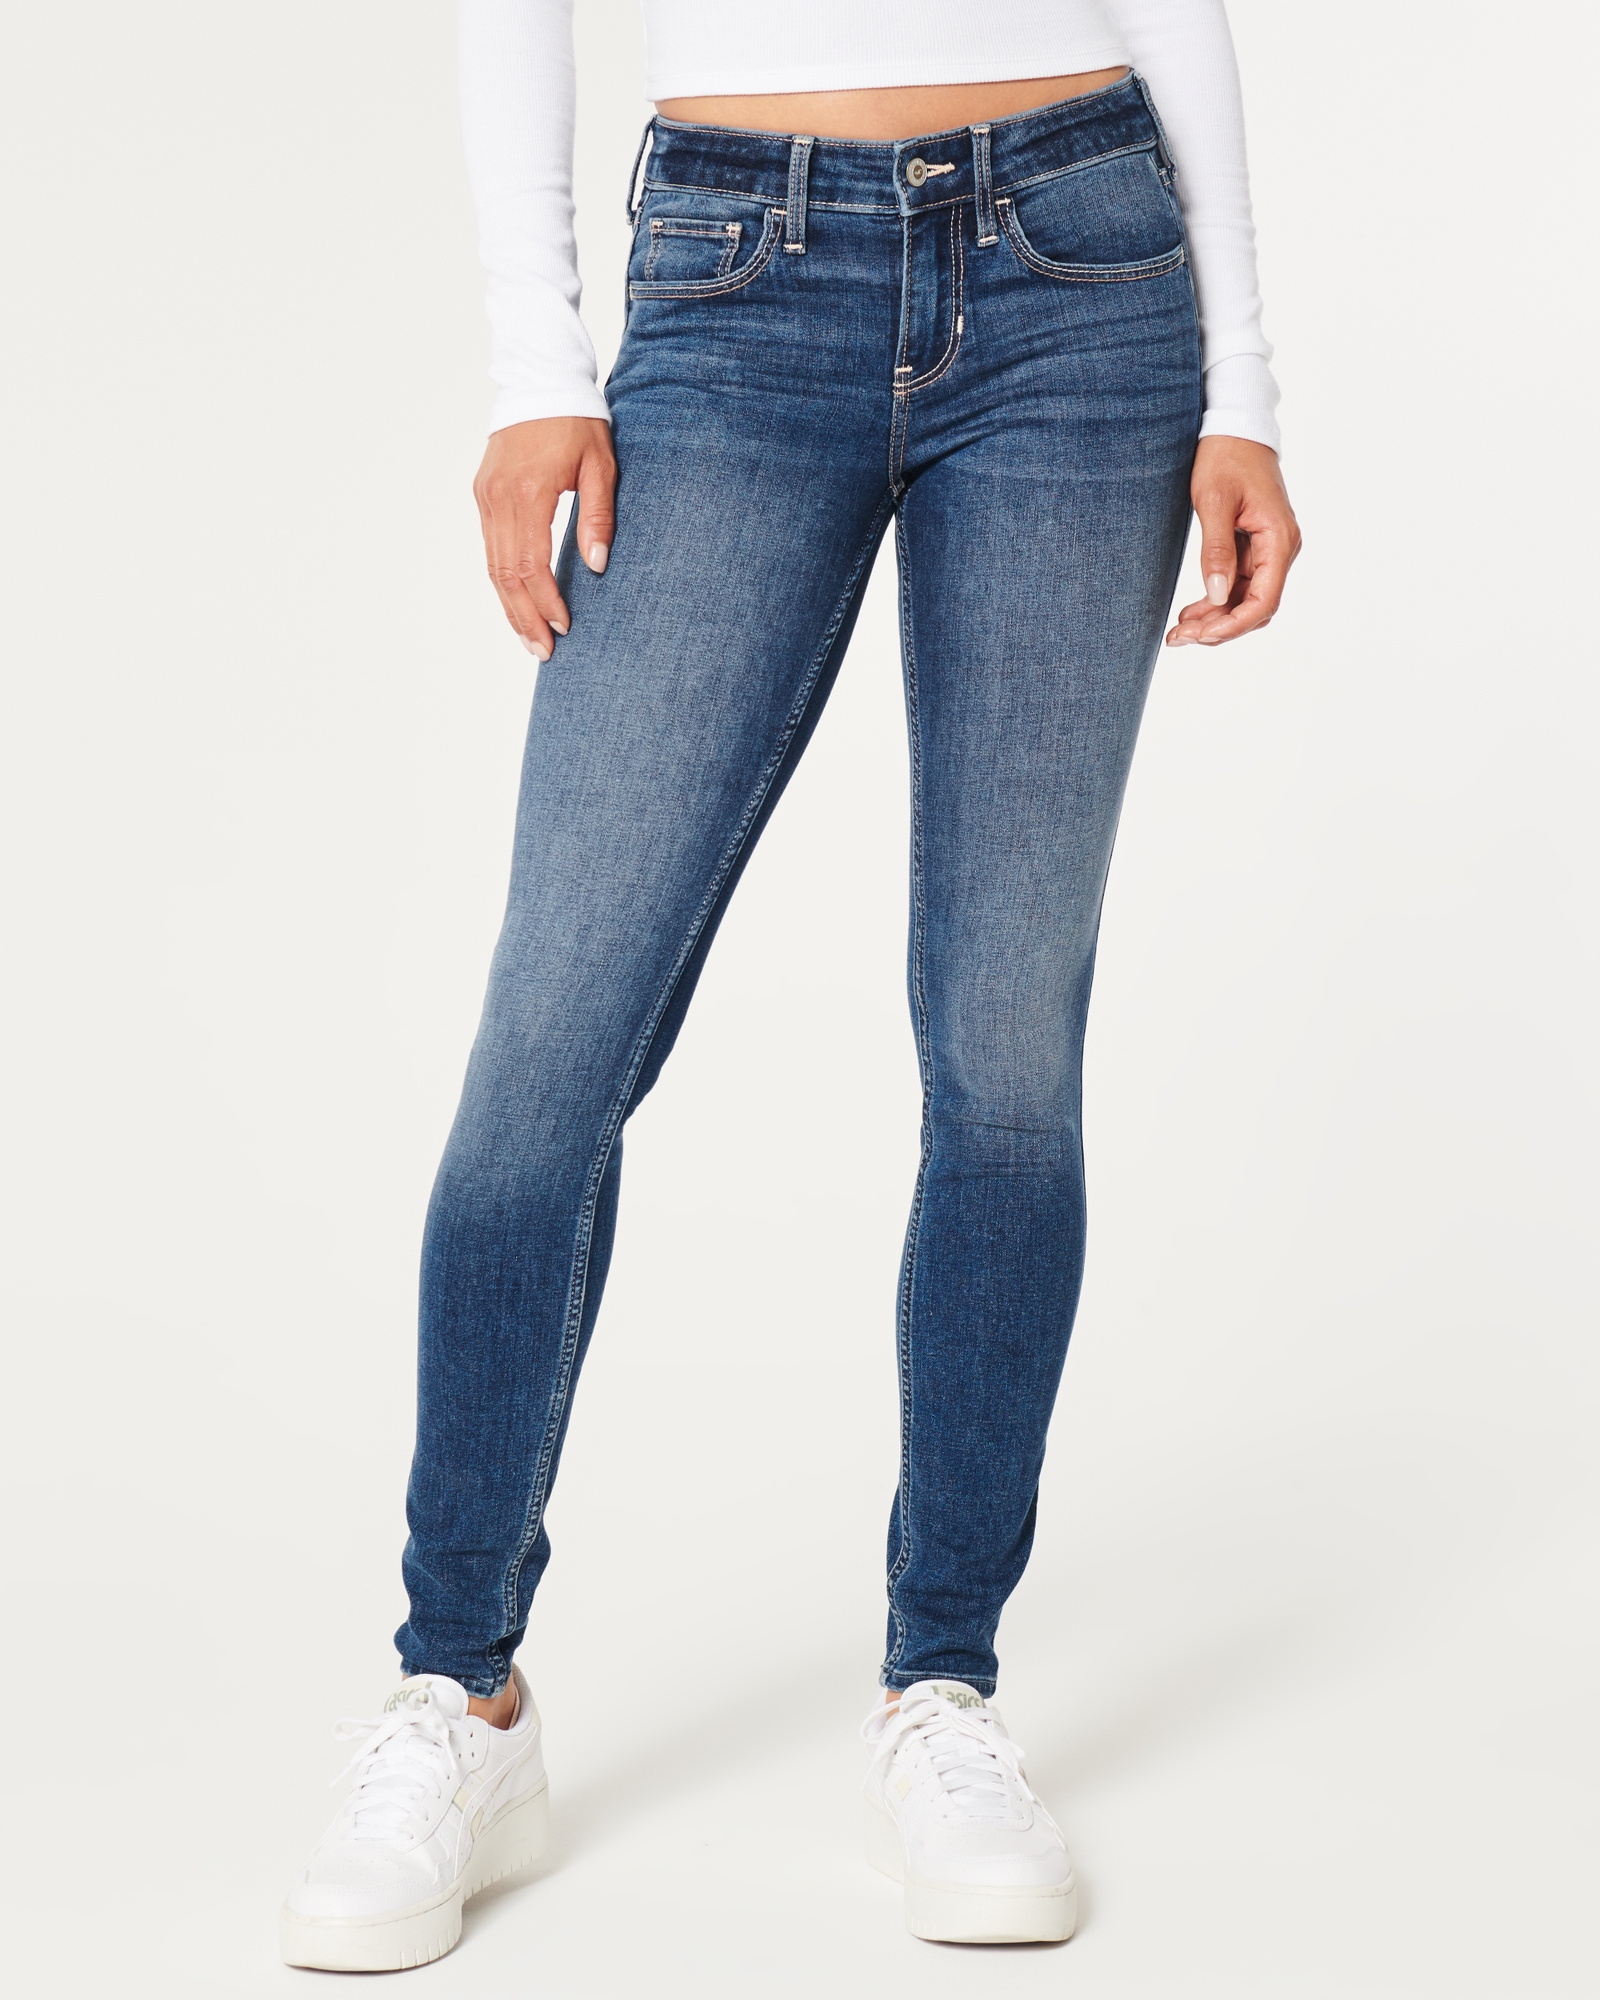 Hollister Women's Jeans 7R Super Skinny W 28 in x L 31 Classic